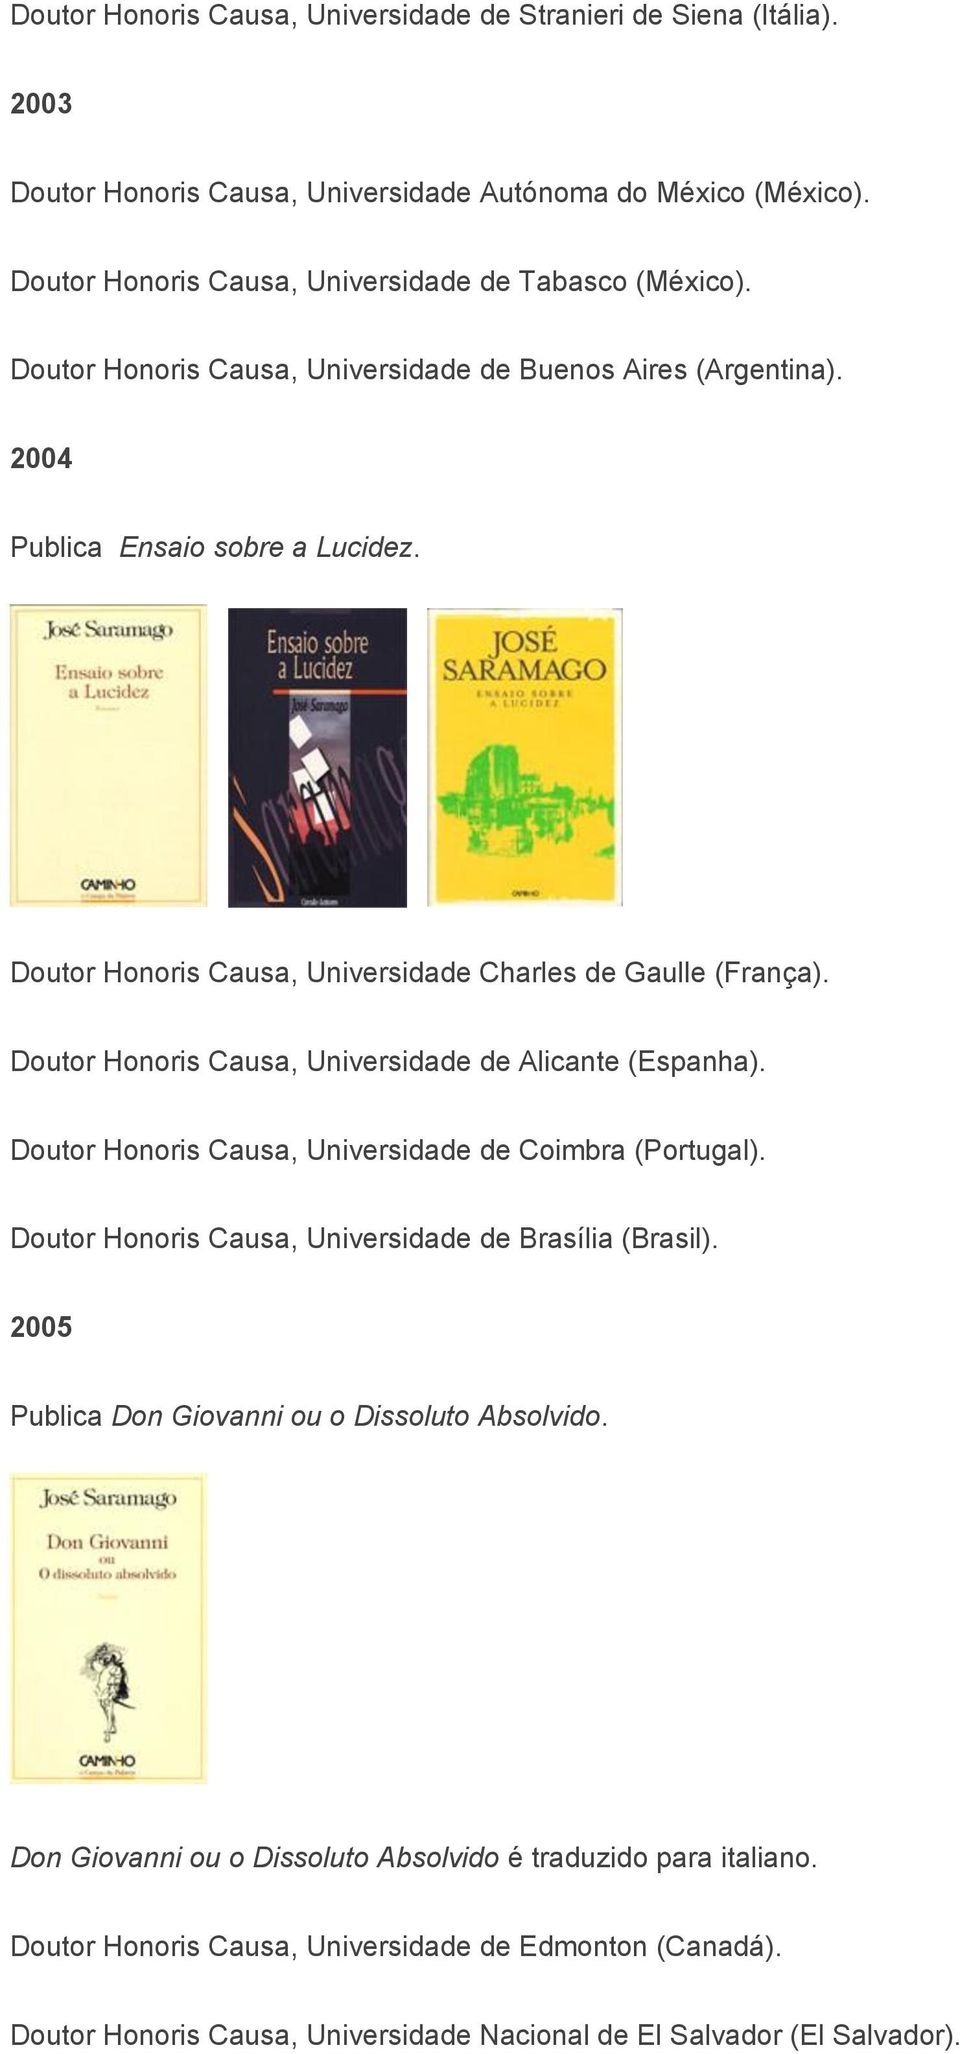 Doutor Honoris Causa, Universidade de Alicante (Espanha). Doutor Honoris Causa, Universidade de Coimbra (Portugal). Doutor Honoris Causa, Universidade de Brasília (Brasil).